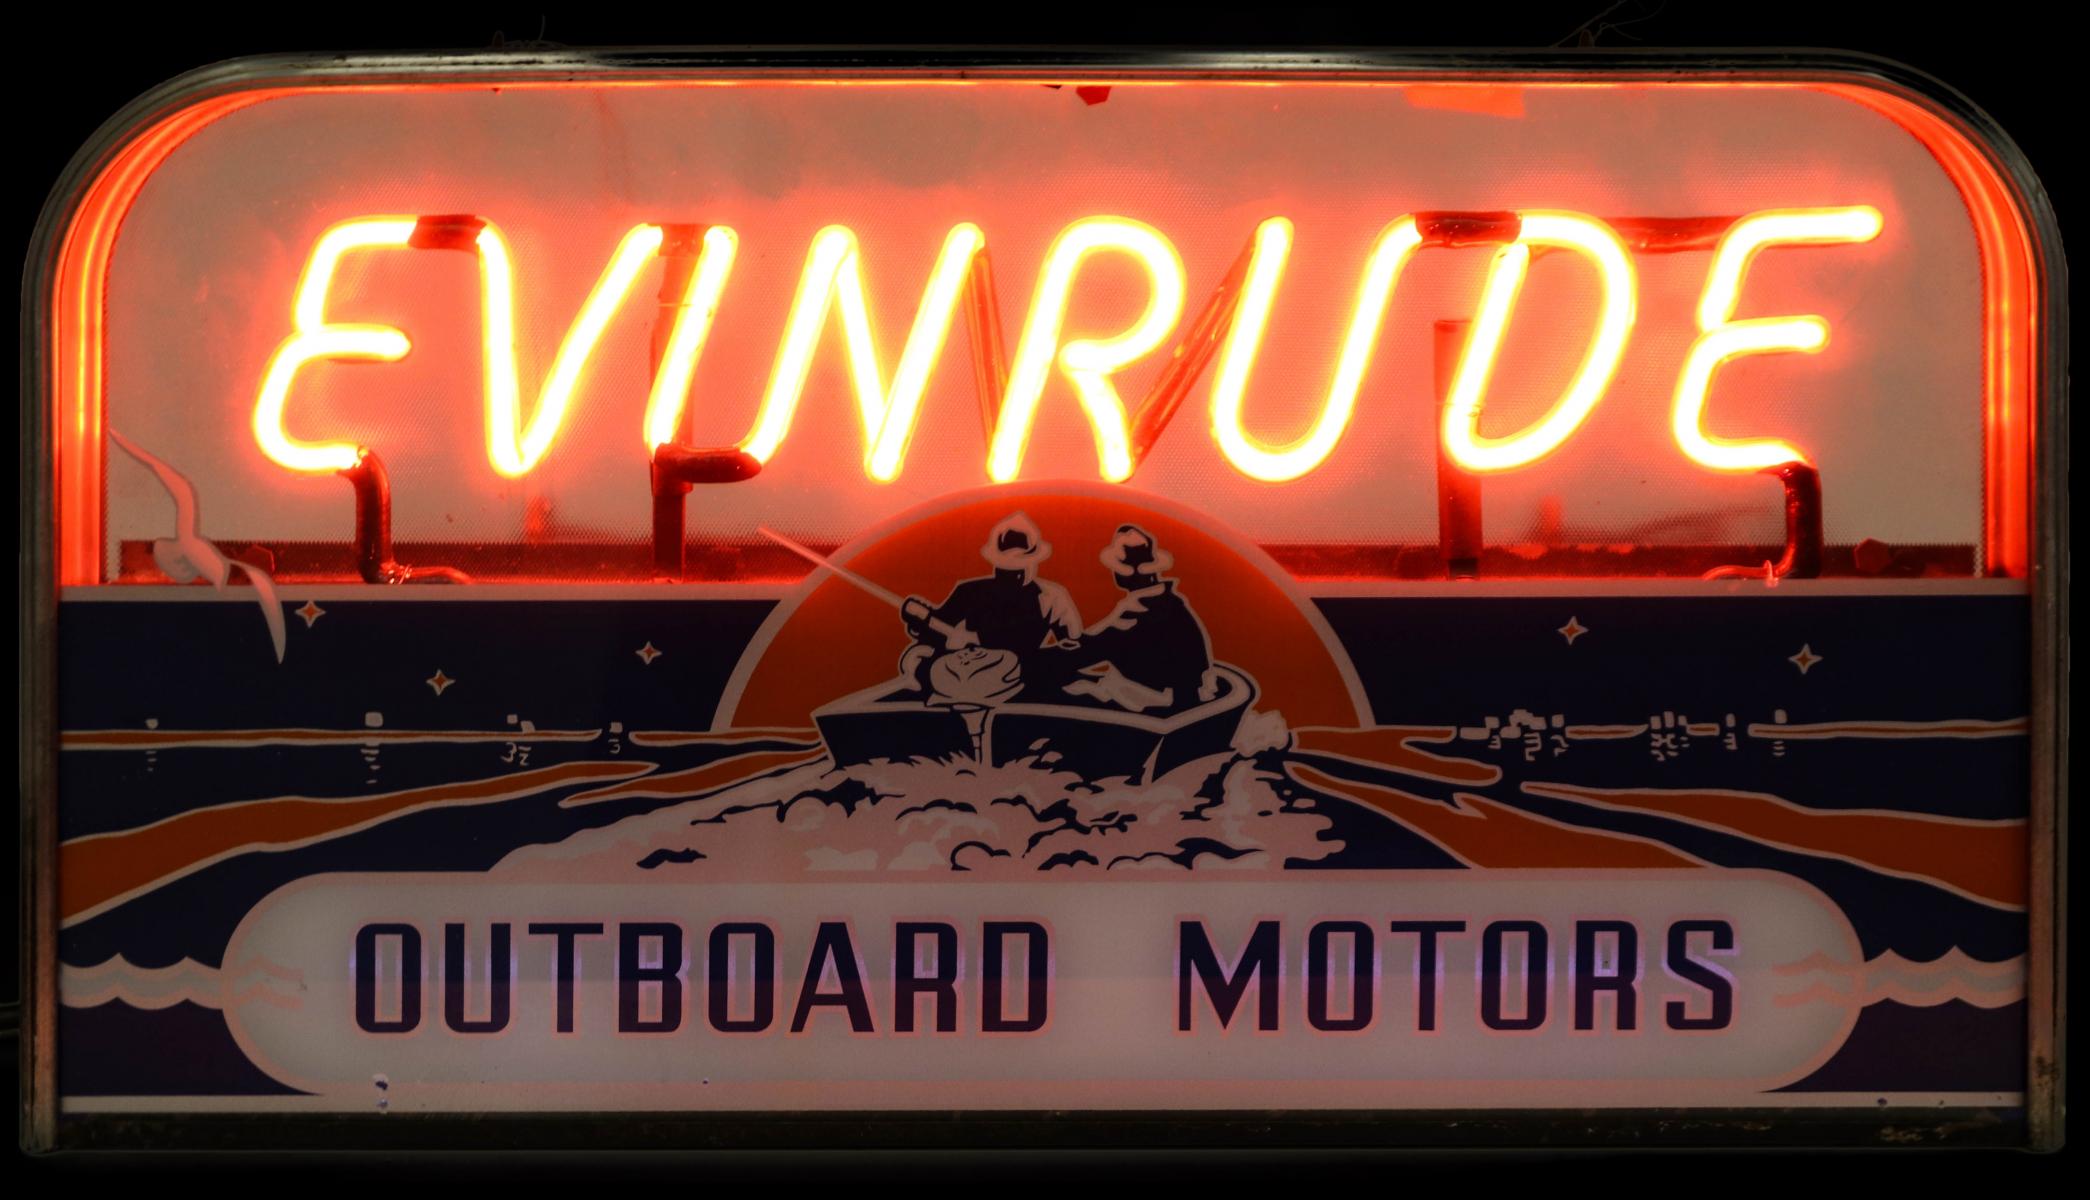 AN EVINRUDE OUTBOARD MOTORS NEON DEALER'S SIGN C. 1950